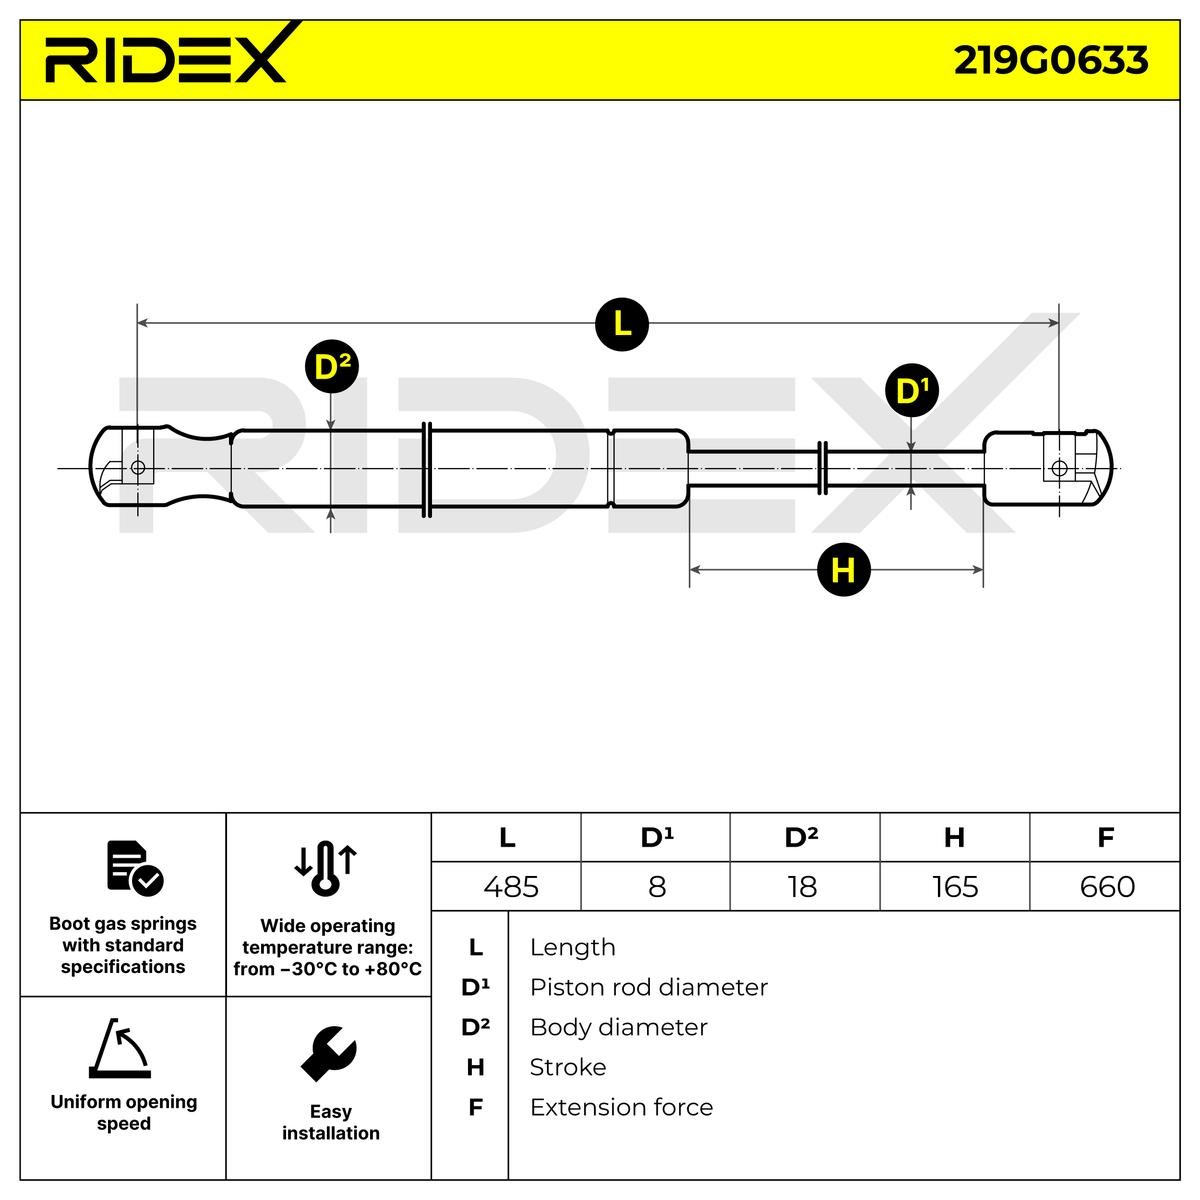 RIDEX Boot struts 219G0633 buy online